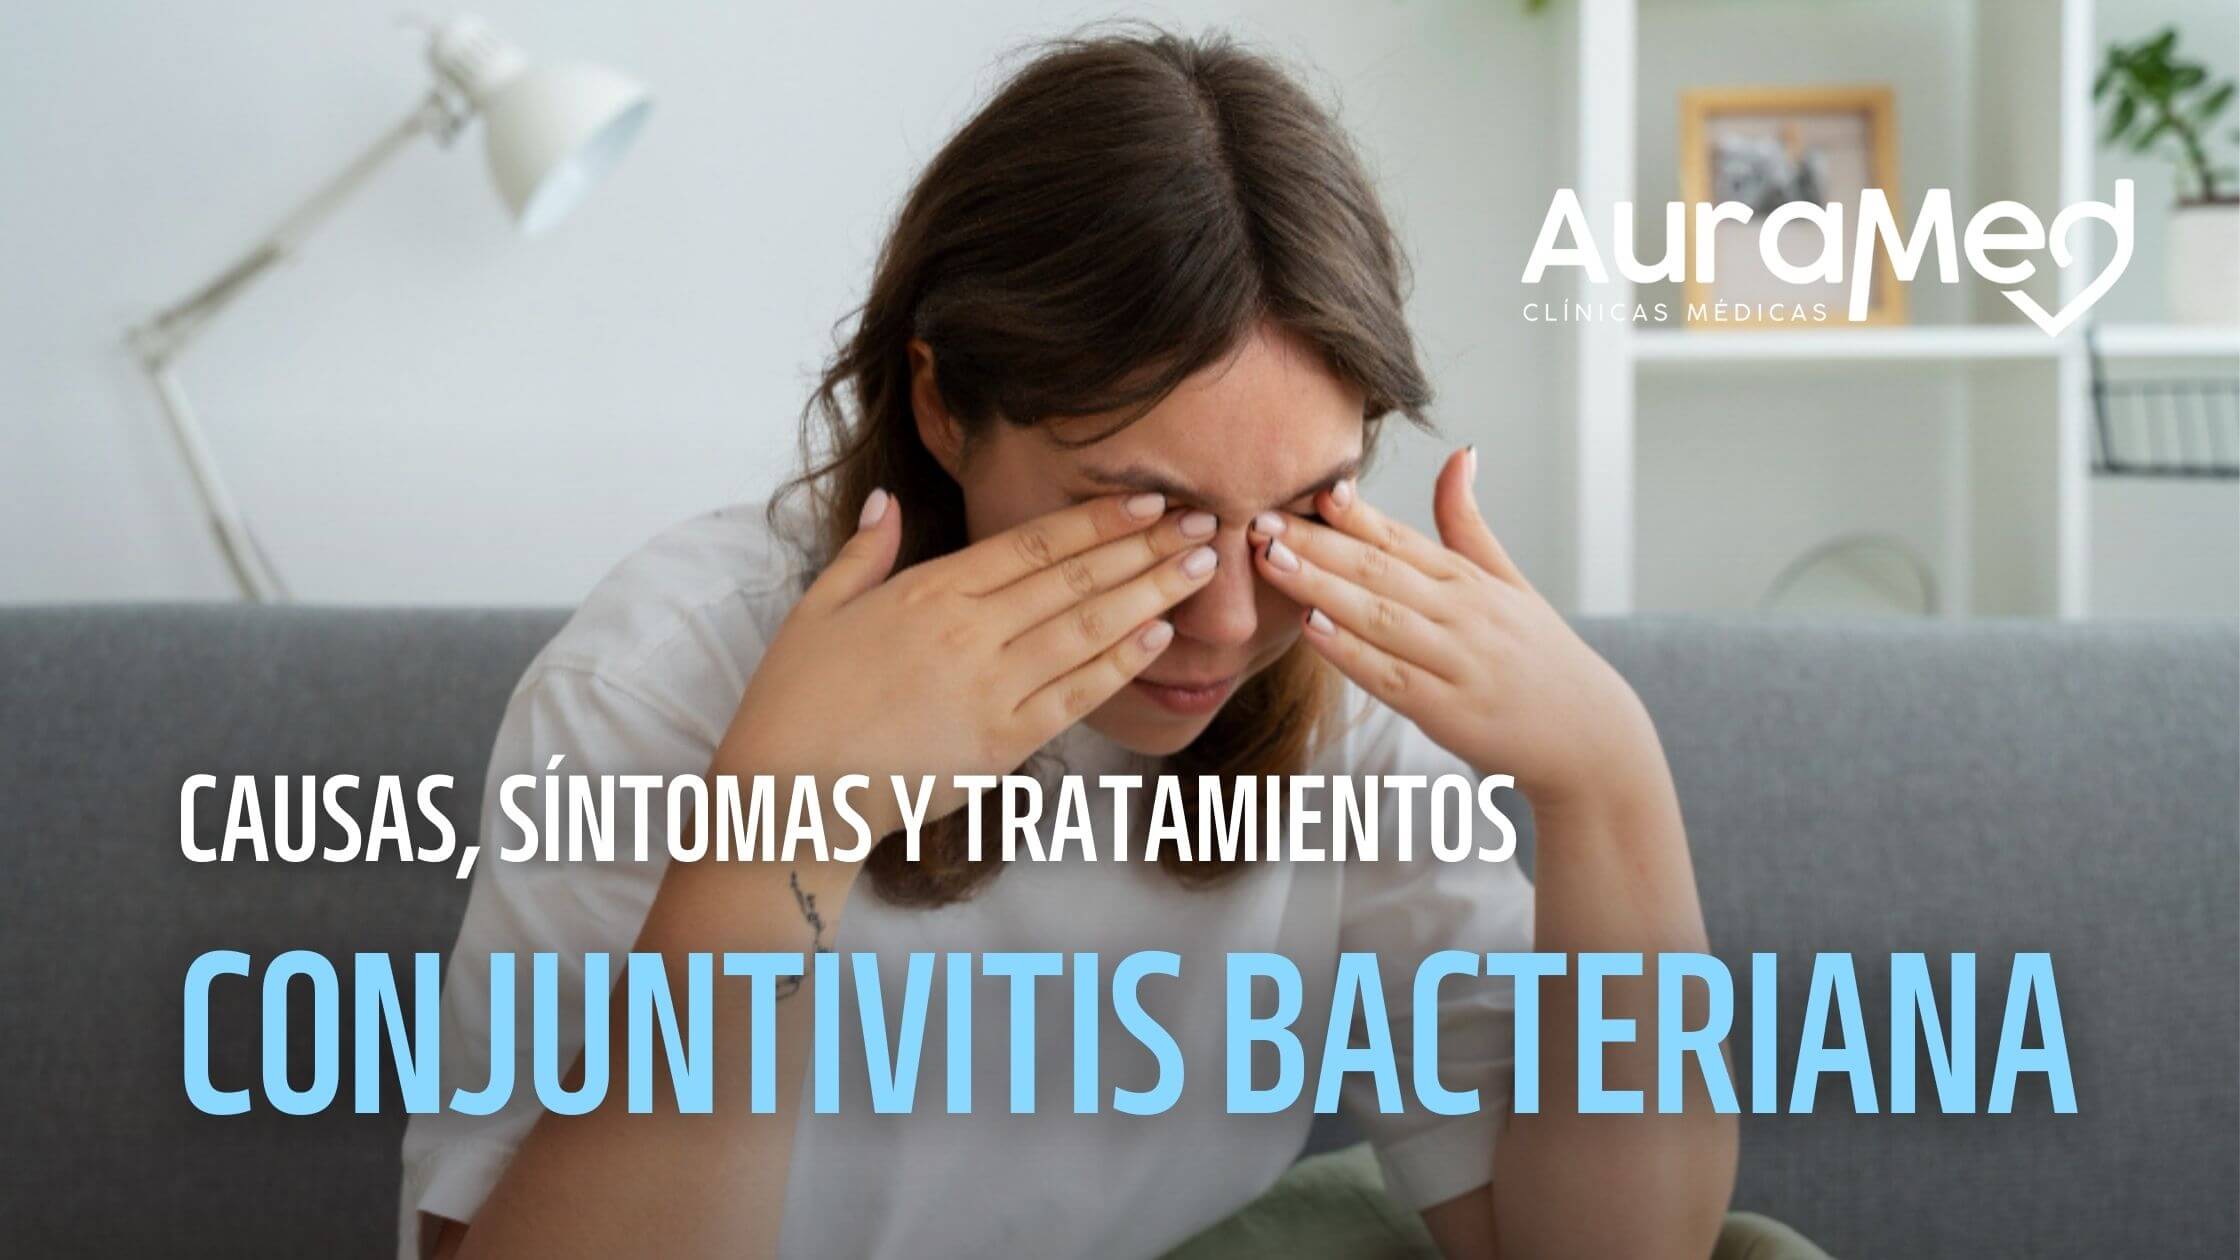 Auramed conjuntivitis bacteriana